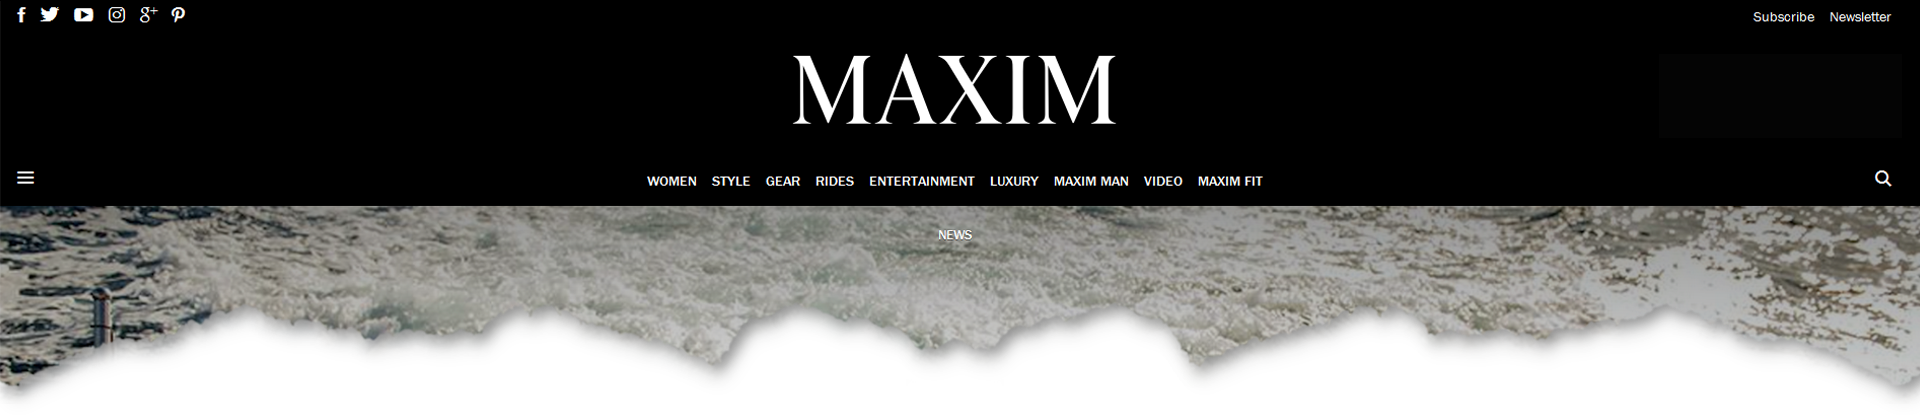 Maxim Magazine Logo